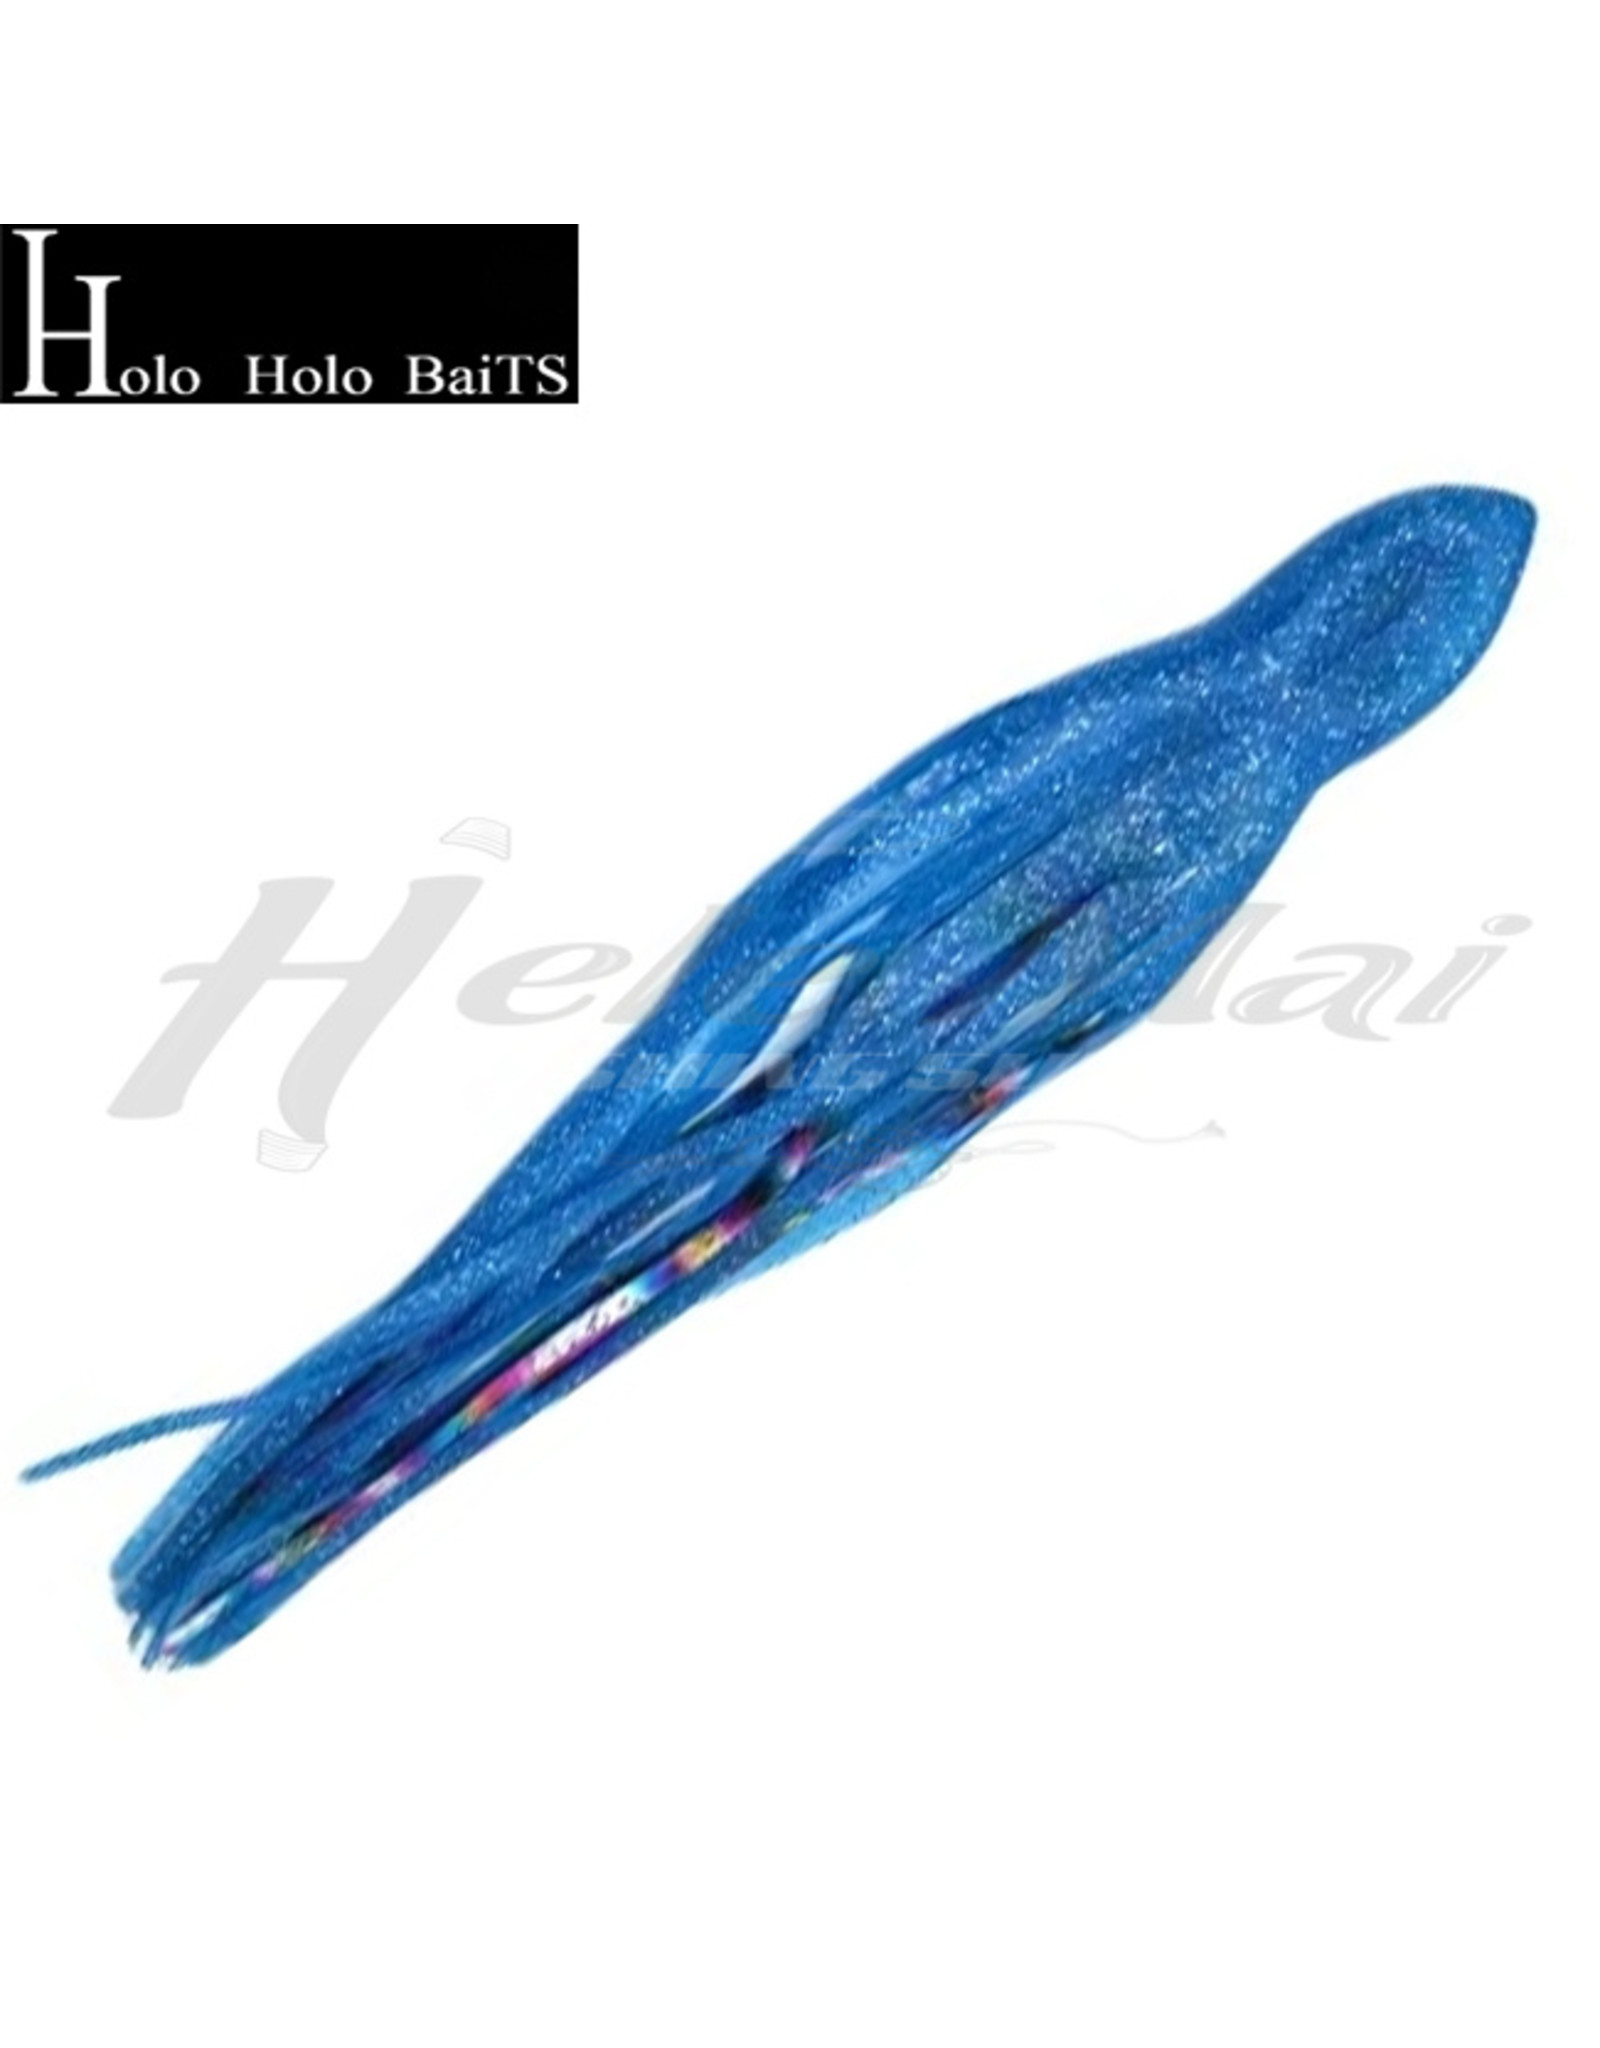 HOLO HOLO HAWAII (HHH) HH, 9" SQUID SKIRT FLASH RAINBOW BLUE 1139